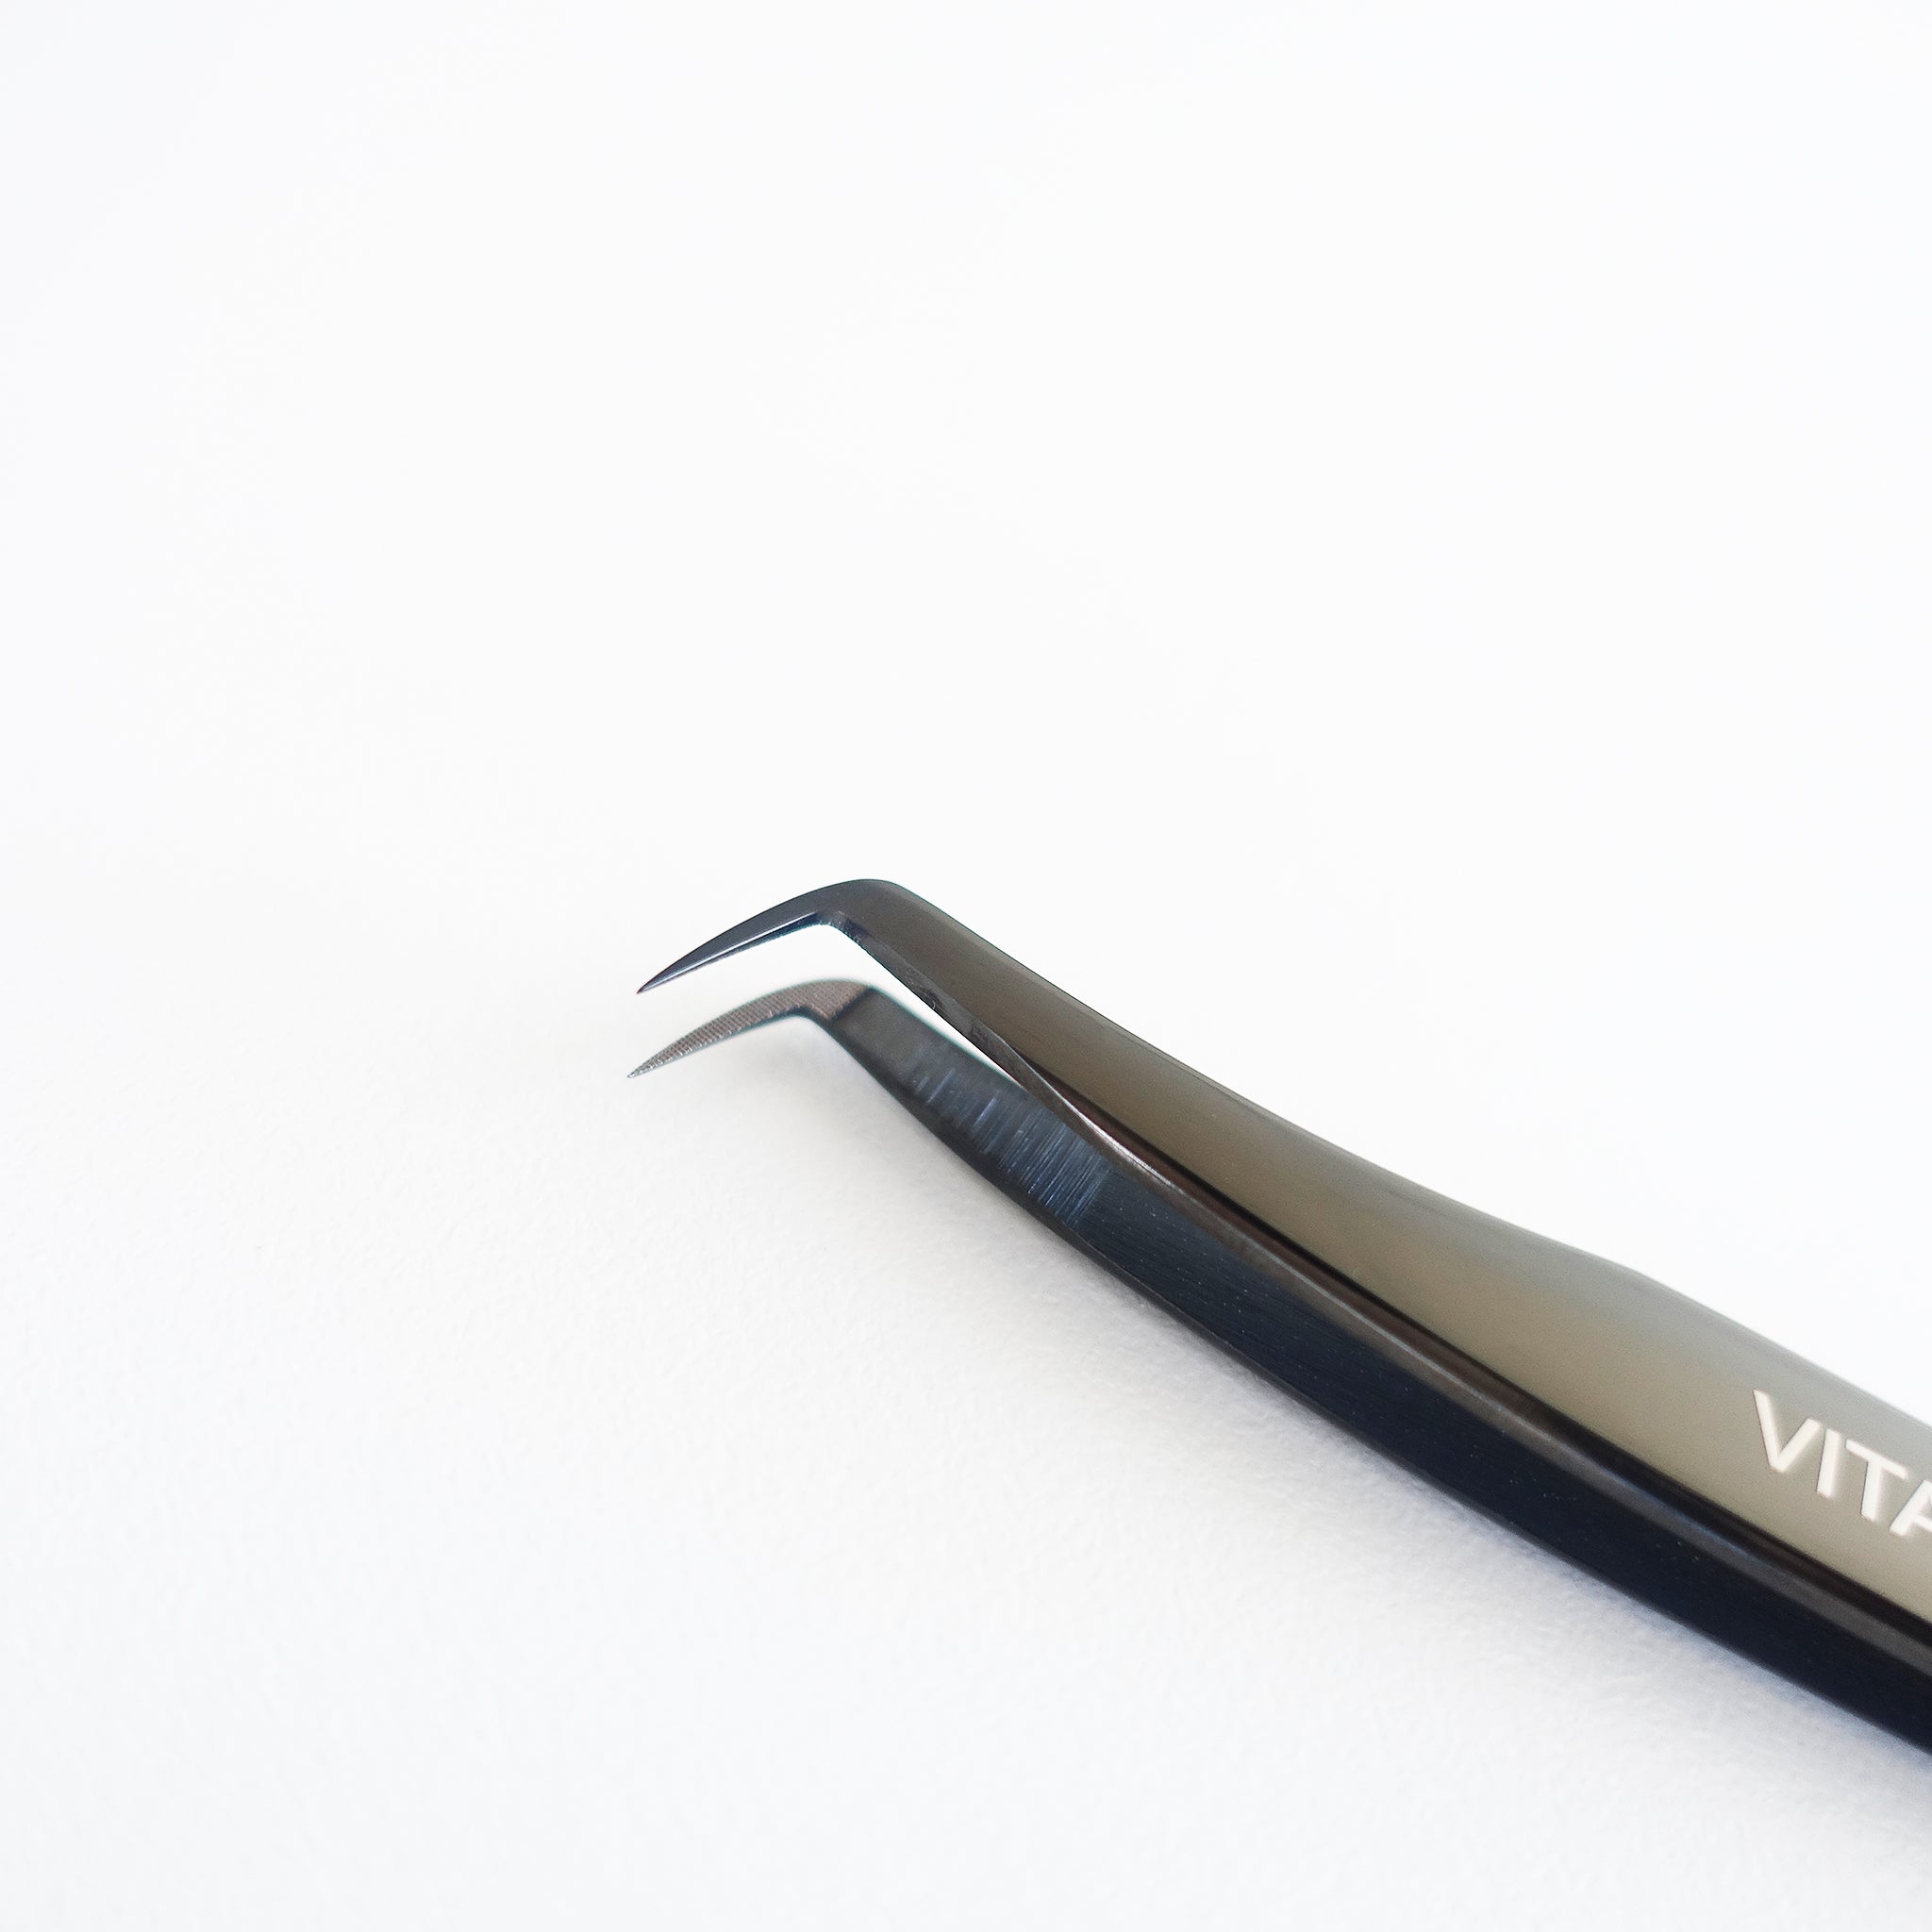 Precision Elite Curved Eyelash Extension Tweezers –